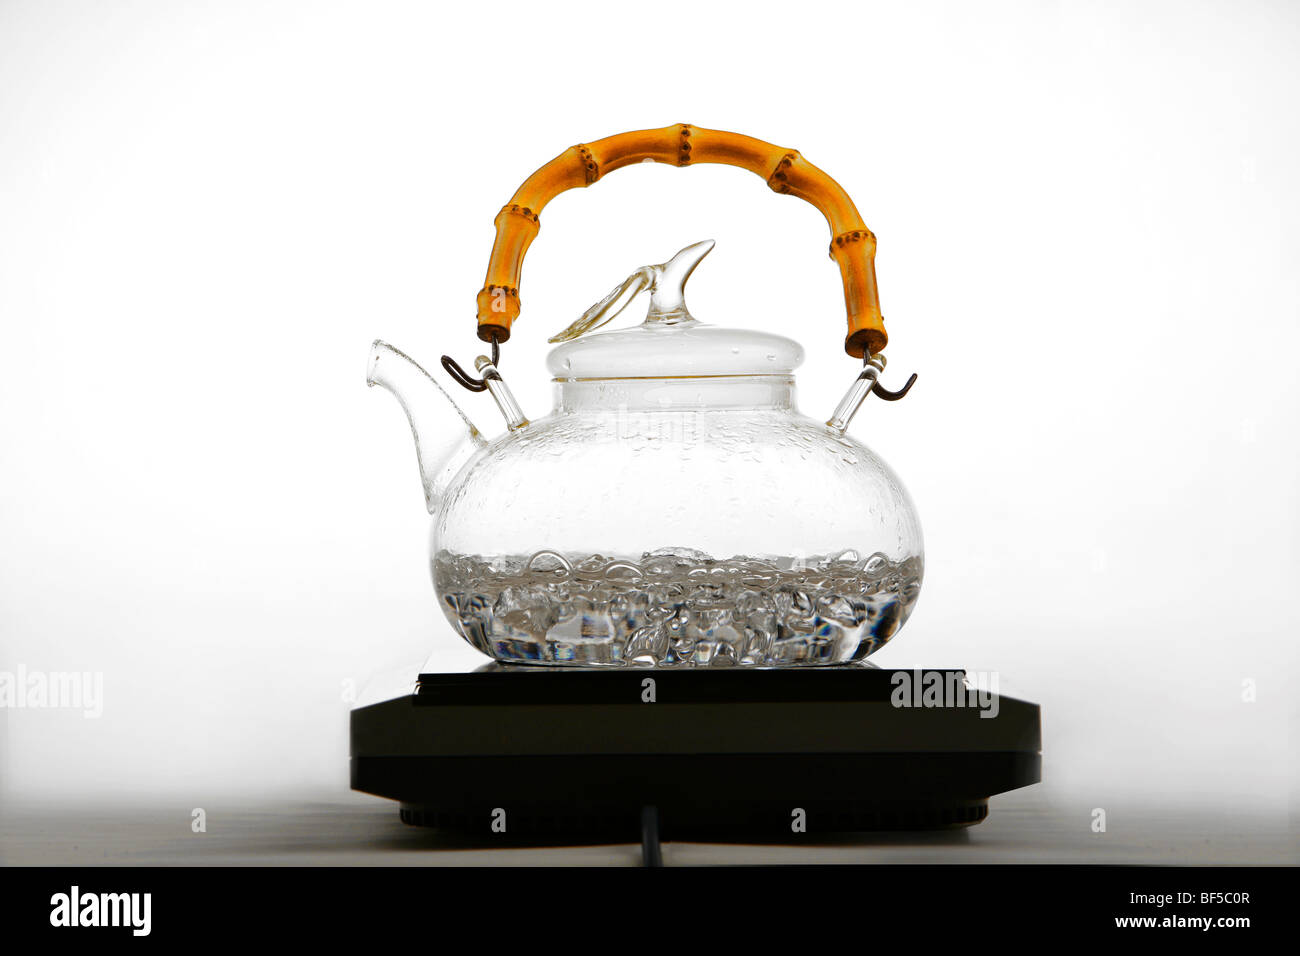 https://c8.alamy.com/comp/BF5C0R/water-boiling-in-glass-tea-pot-BF5C0R.jpg